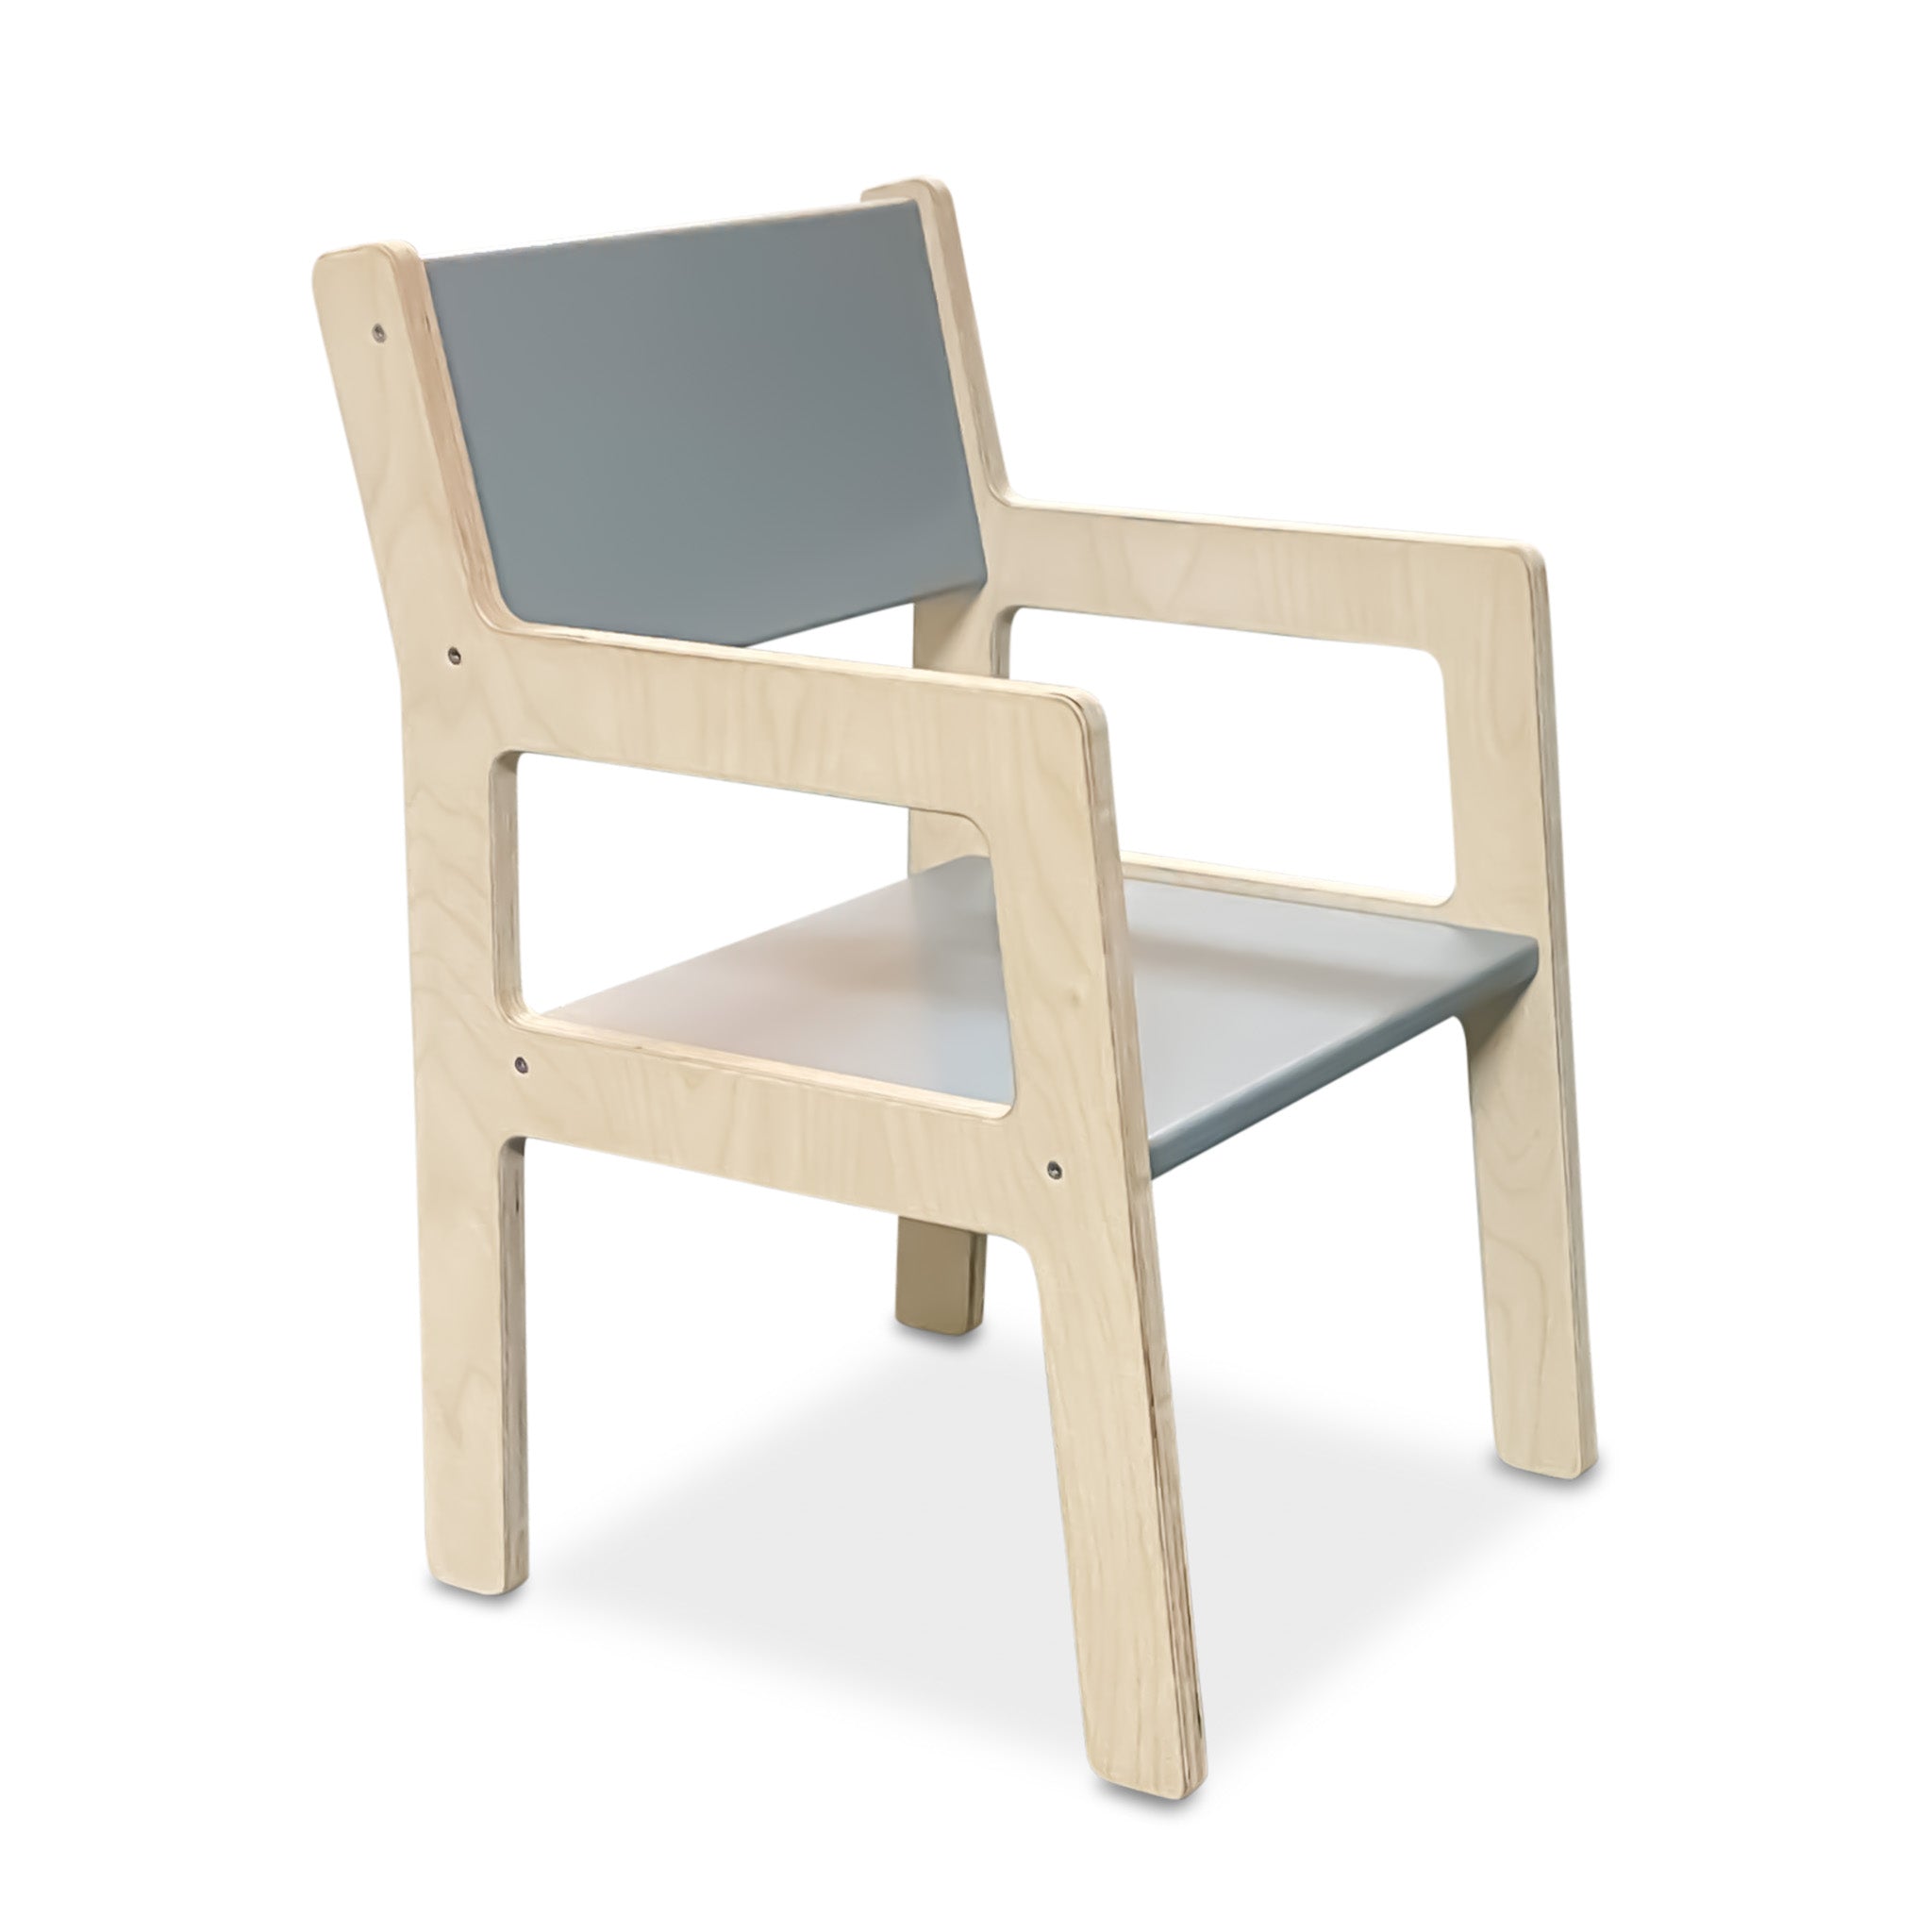 Wooden children's furniture set 4-7 years | Table + 2 chairs - Denim drift